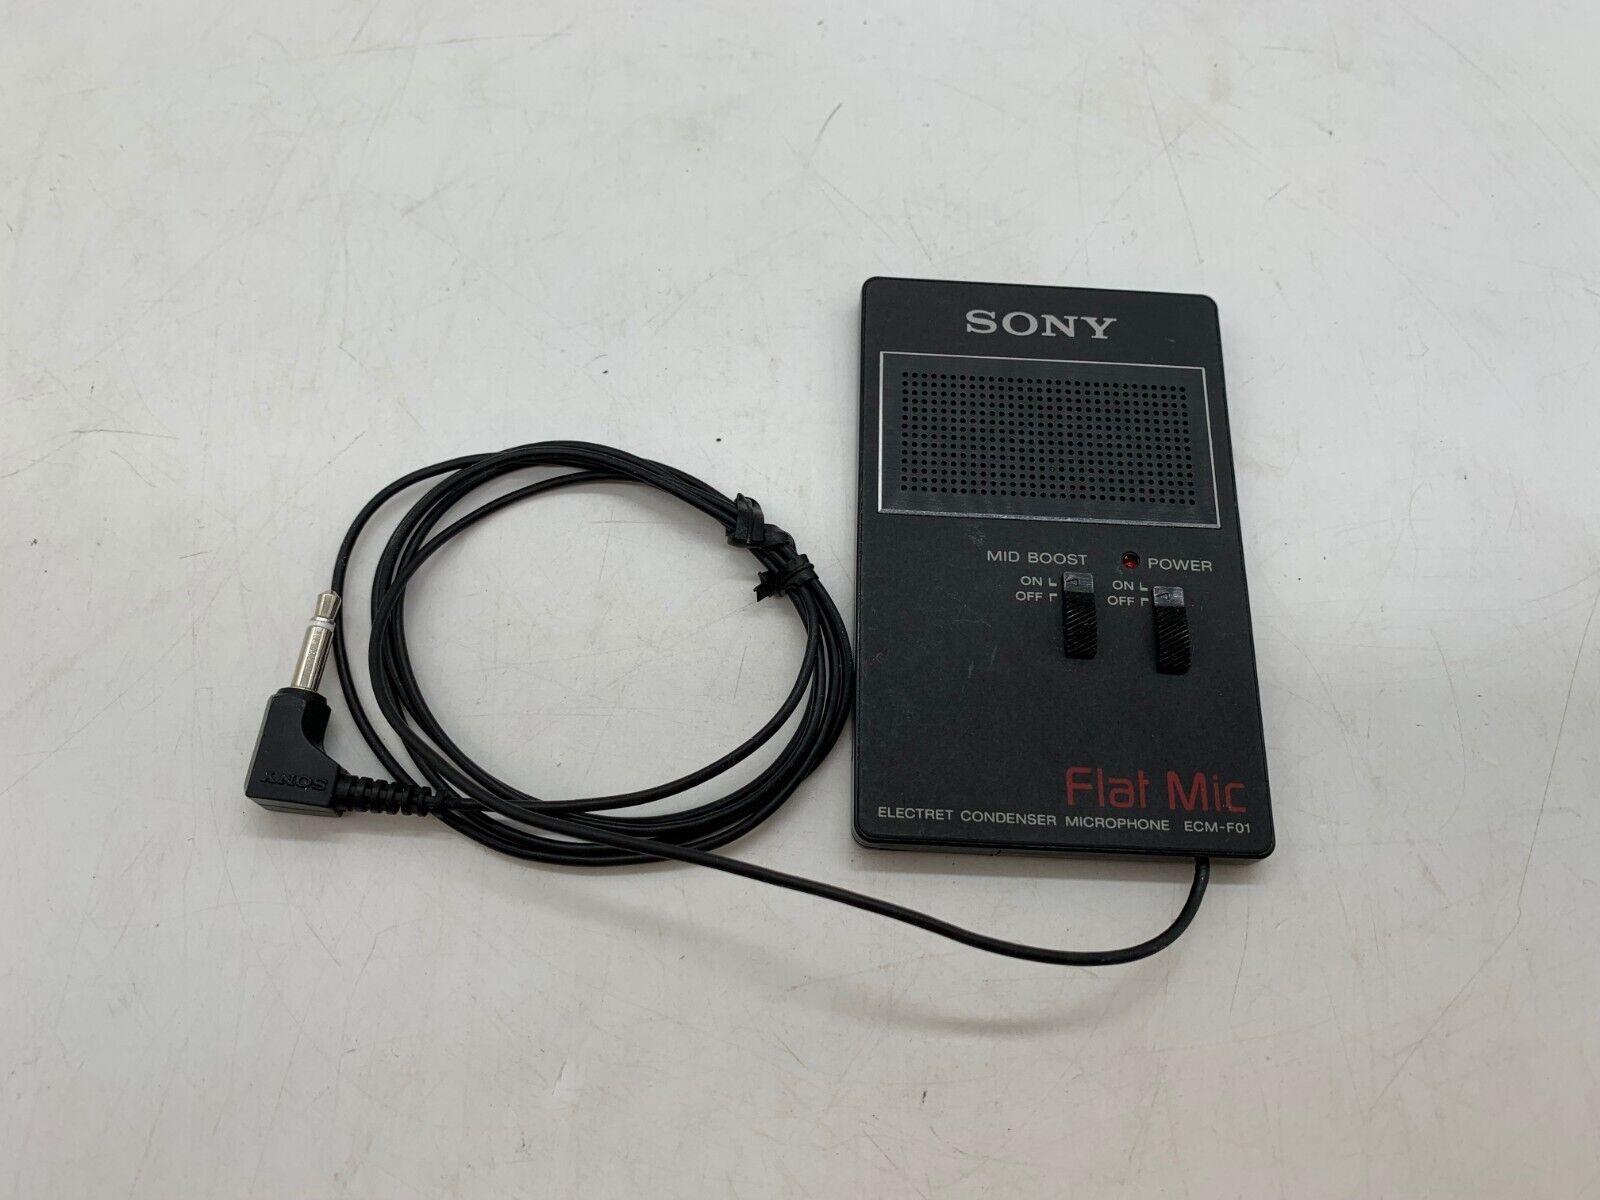 Sony Flat Mic Electret Condenser Microphone ECM-F01 